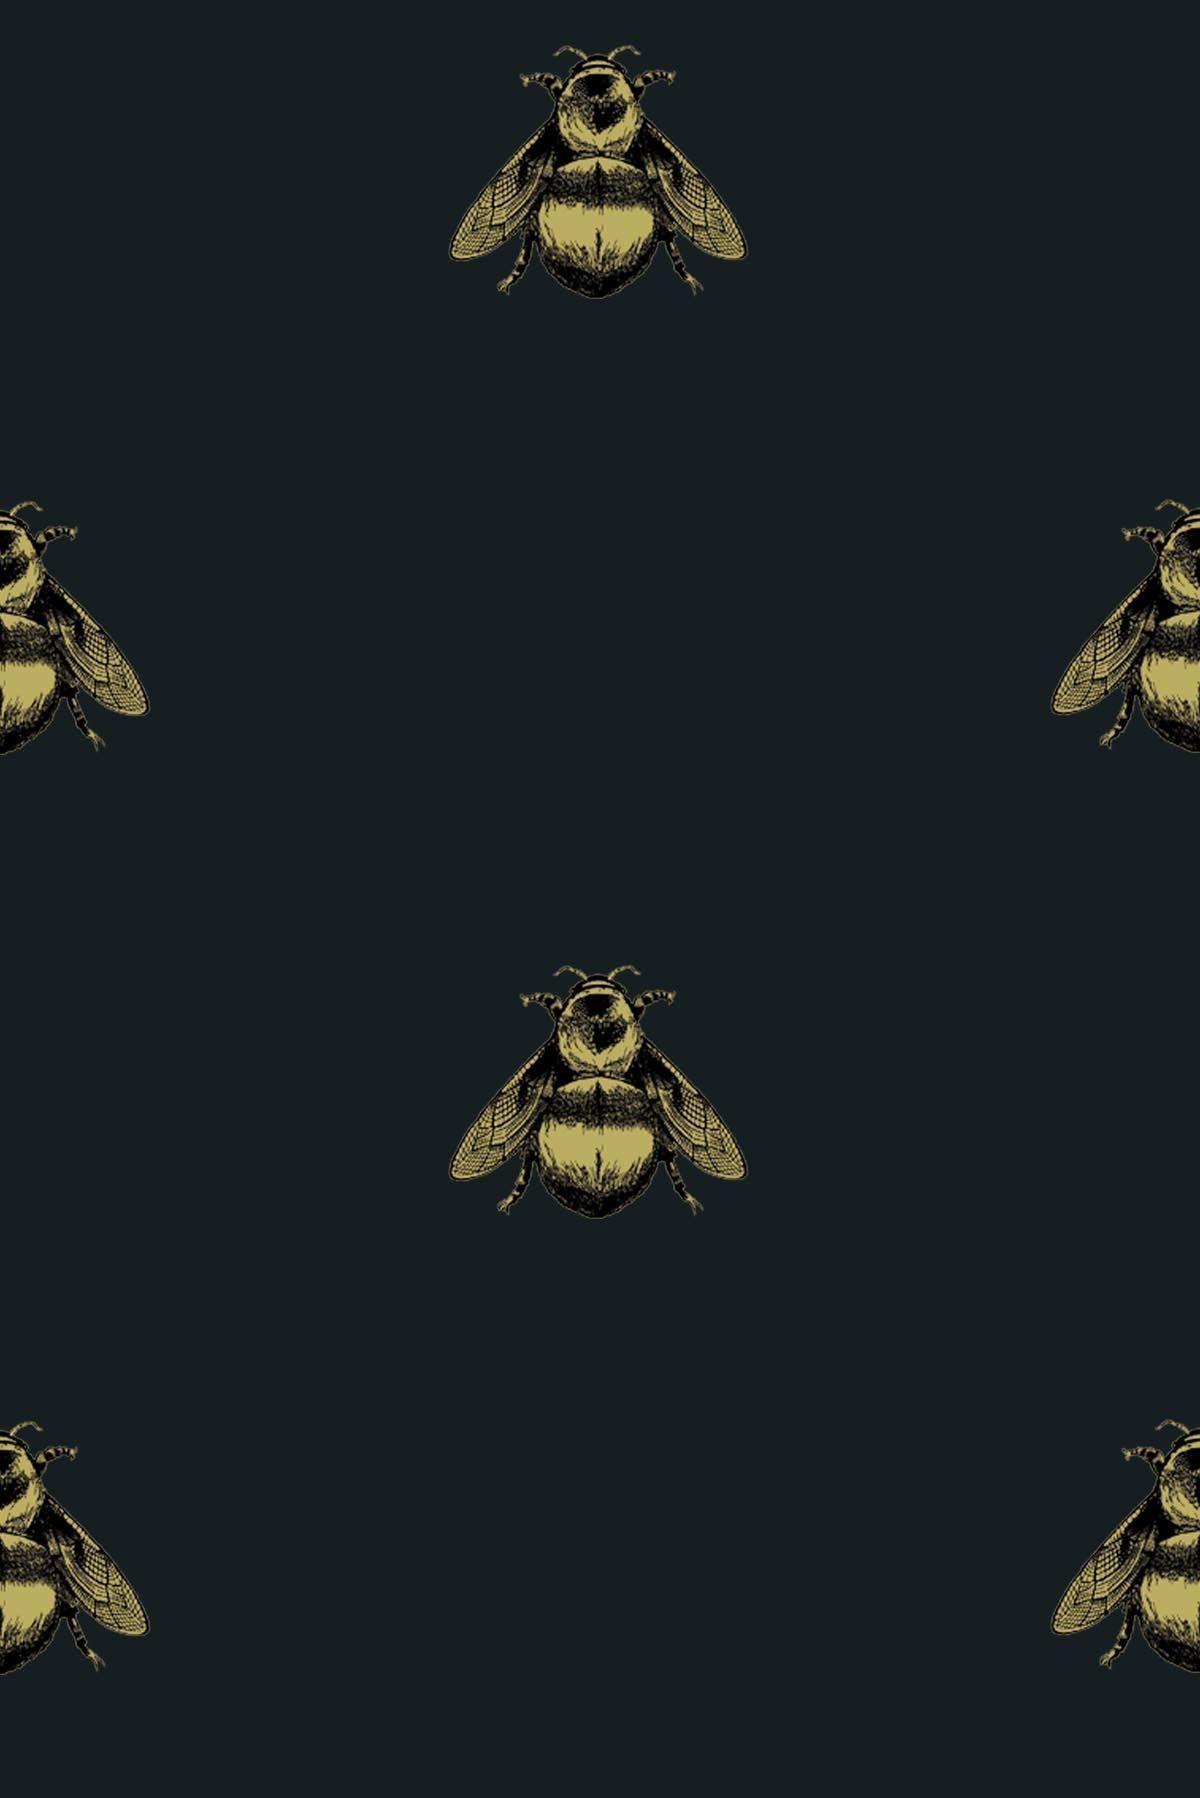 Napoleon Bee Wallpaper